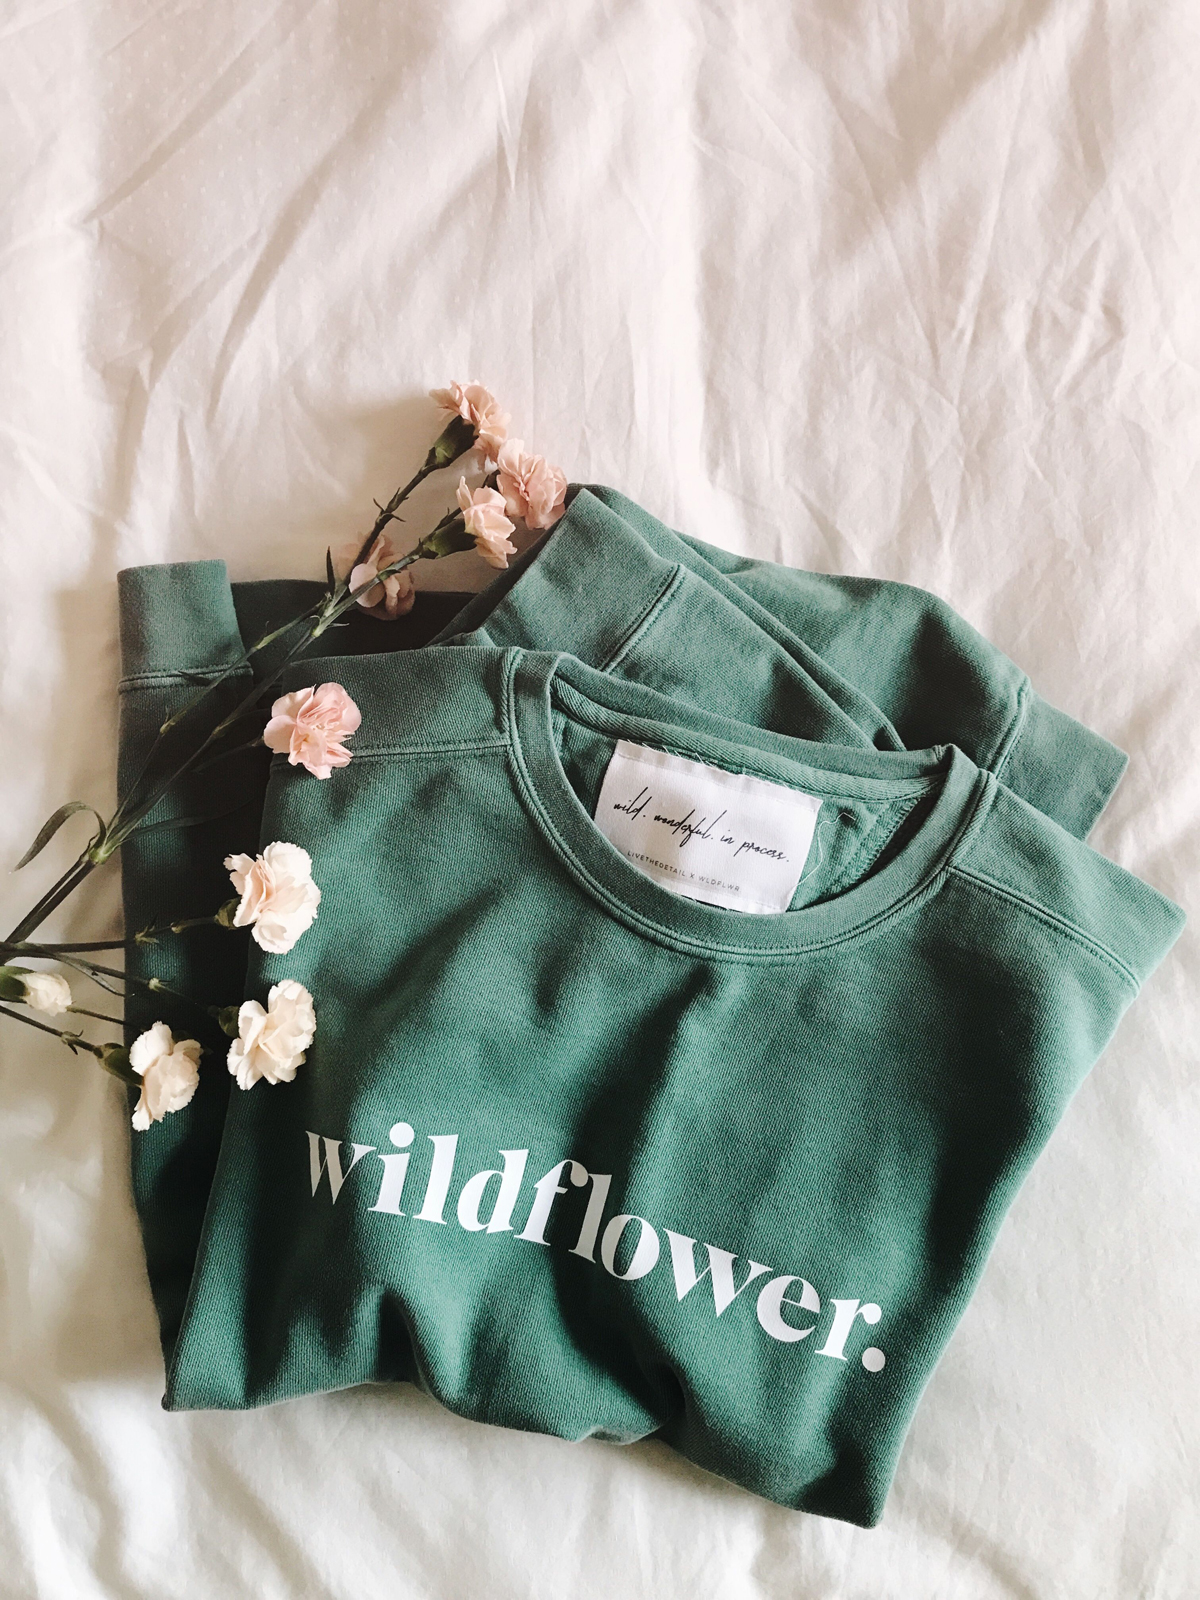 "Wildflower" ID?